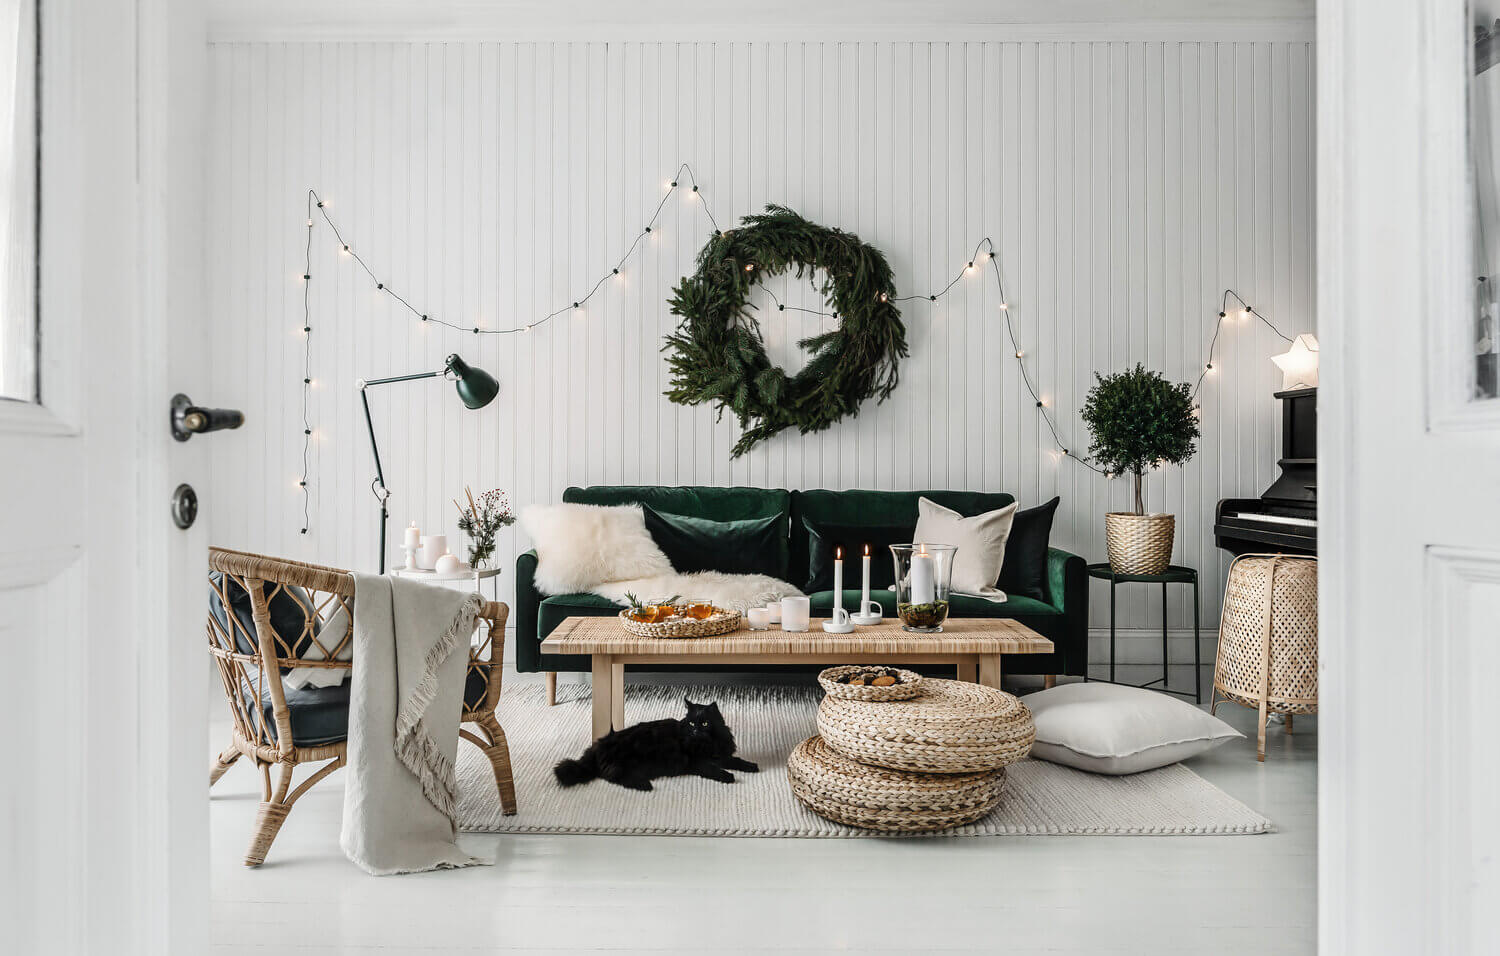 ikea christmas decor nordroom5 Cozy Christmas Home Decor Inspiration From IKEA